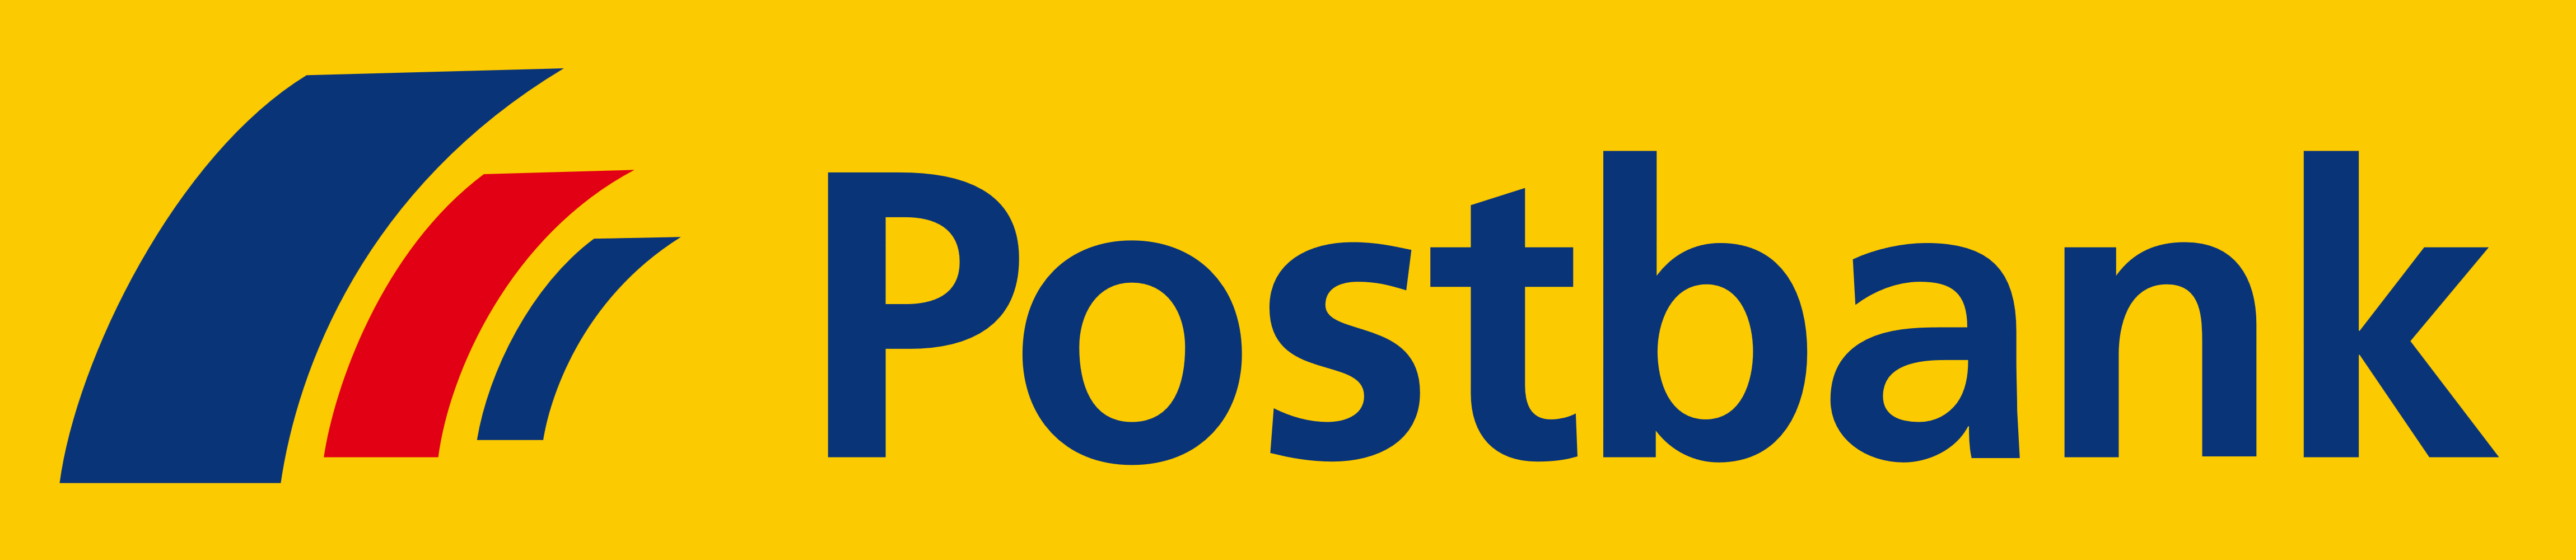 Postbank logo, logotype